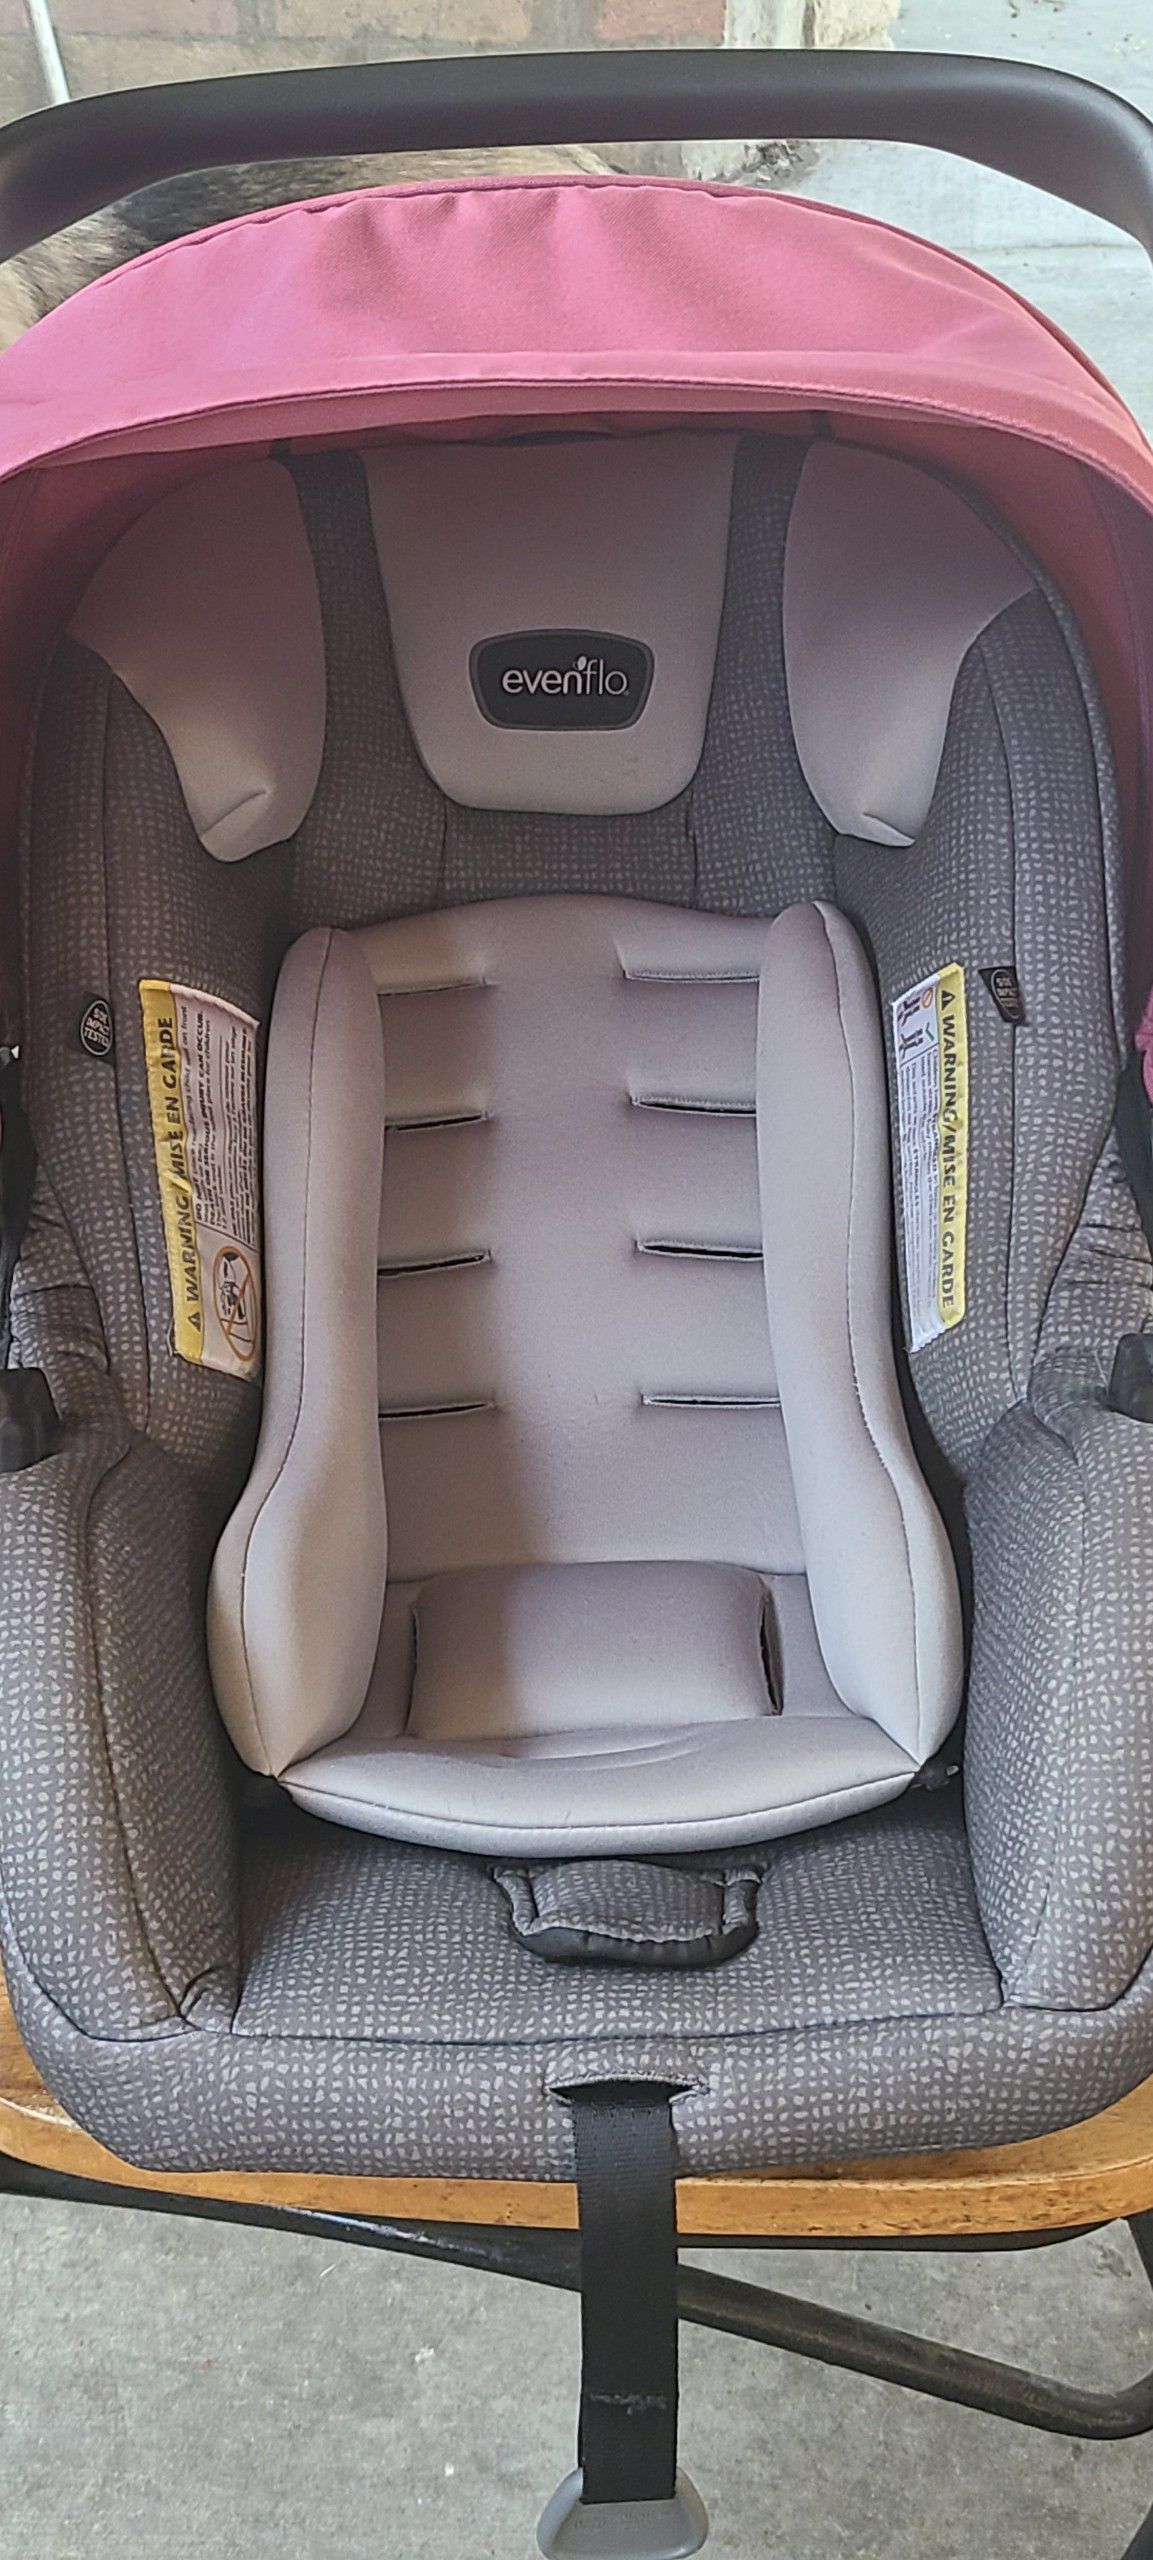 Evenflo inftan car seat